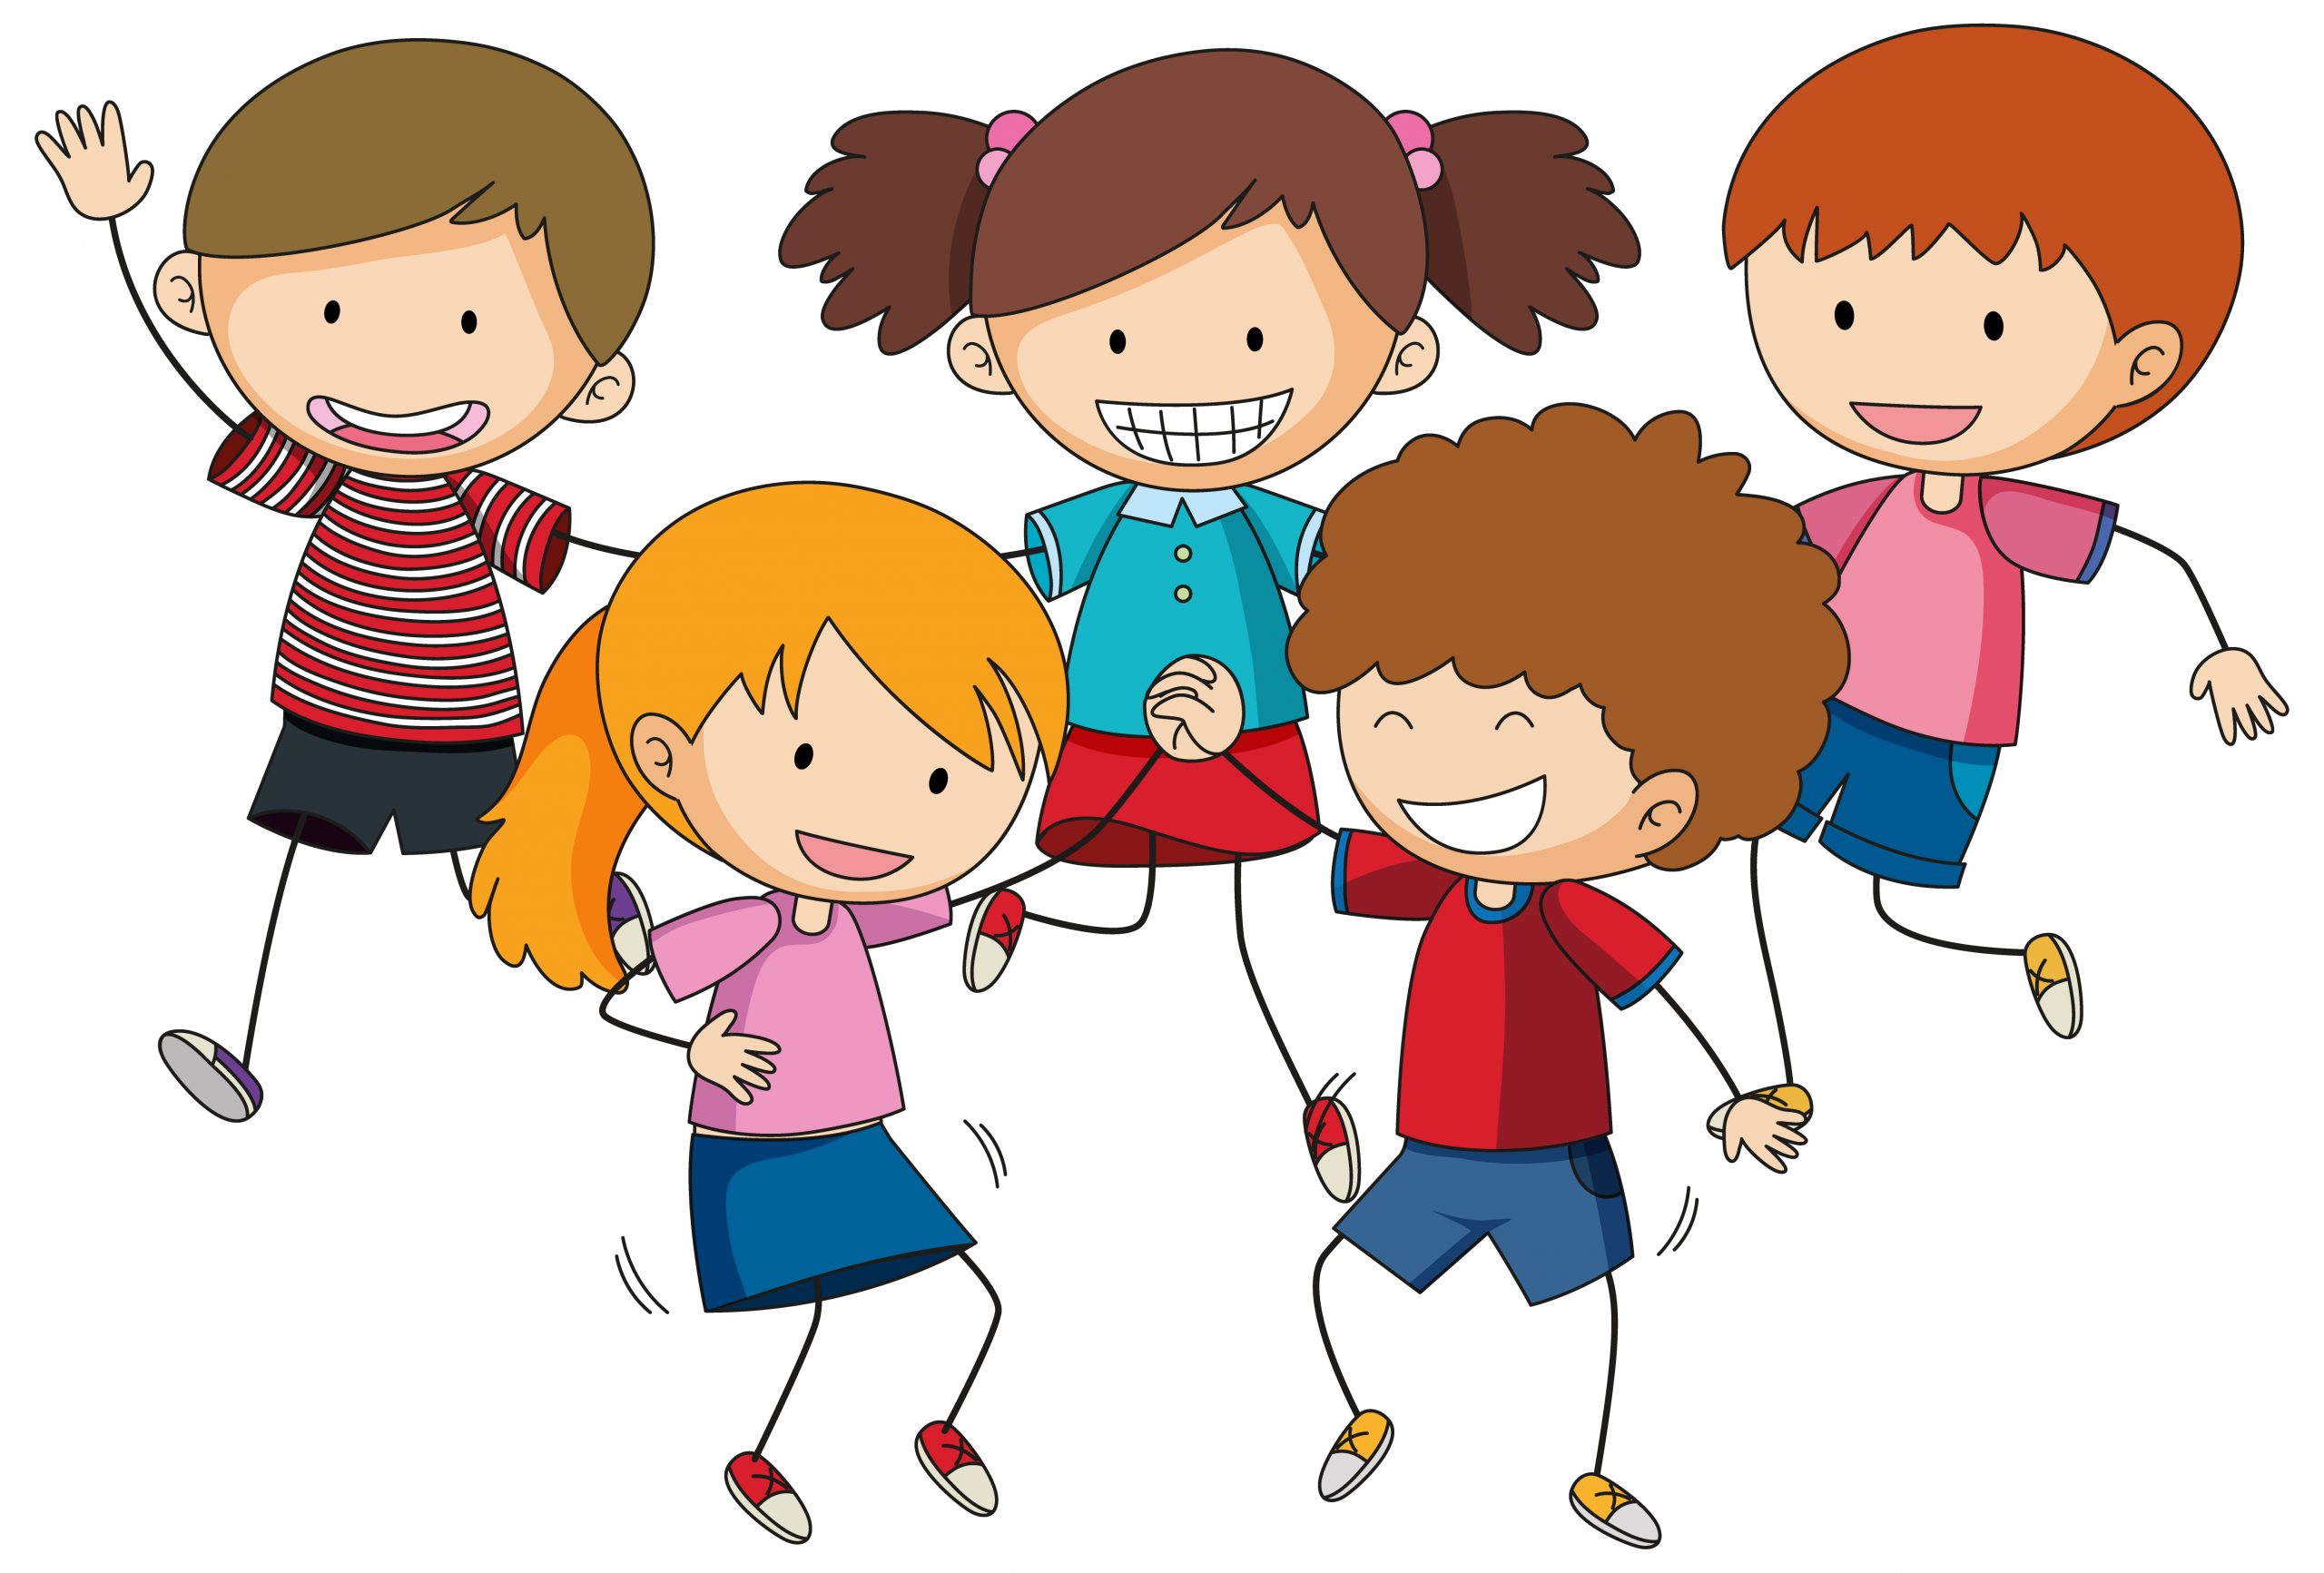 Group of doodle children cartoon character illustration